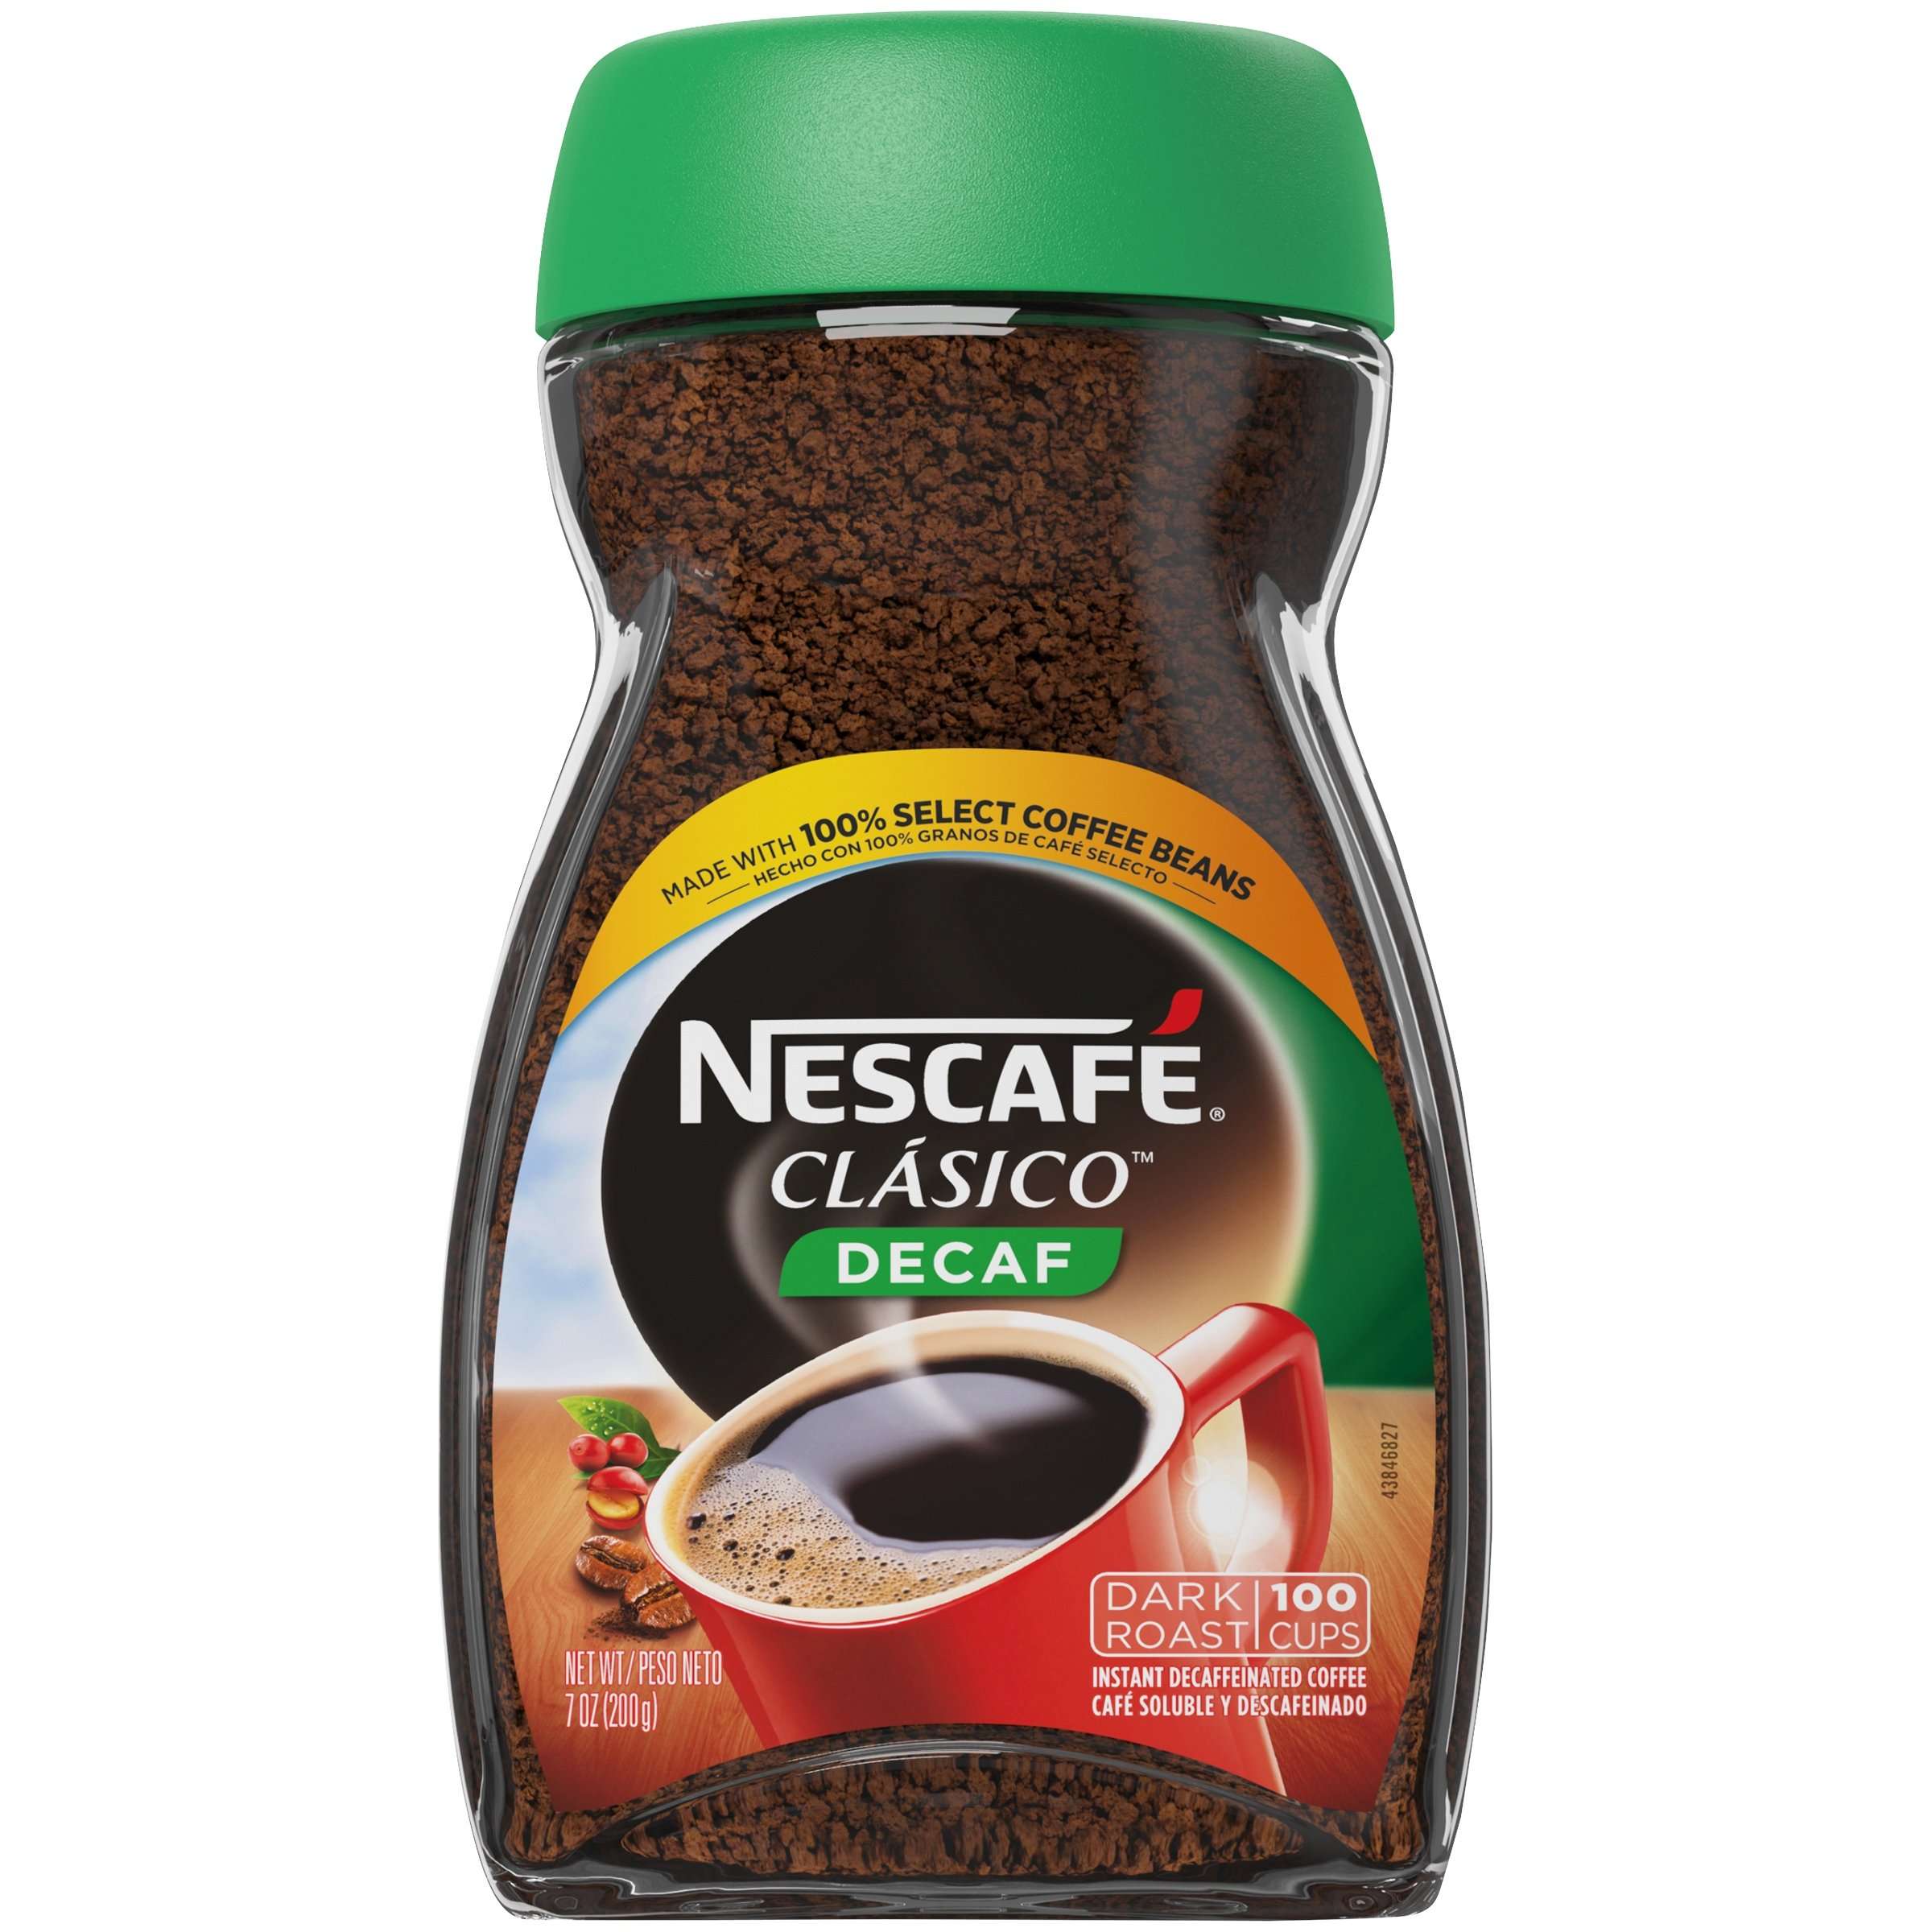 NESCAFE CLASICO Decaf Dark Roast Instant Coffee 7 oz. Jar ...